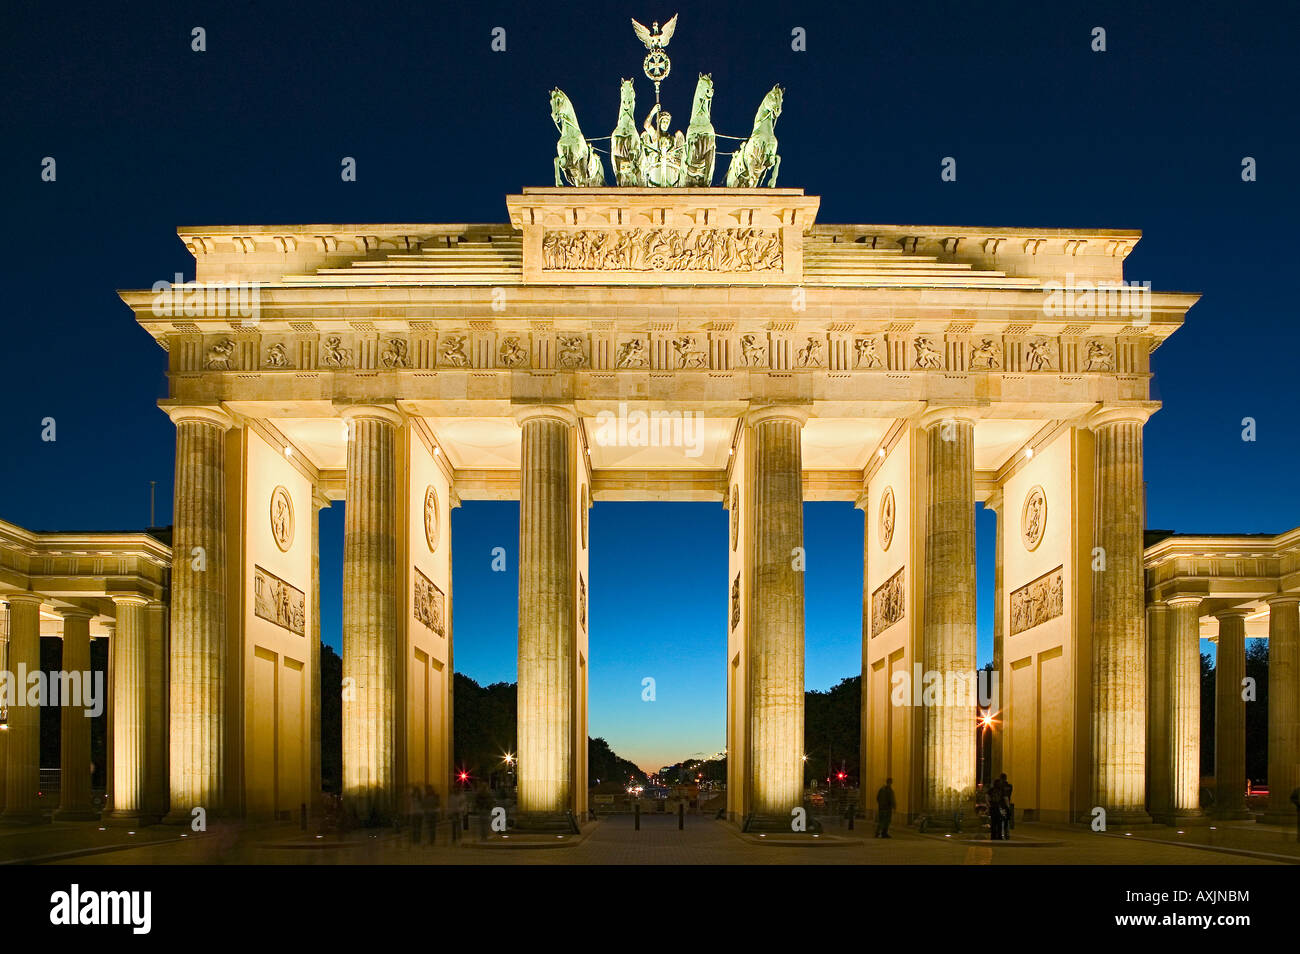 Brandenburger gate in Berlin at night with light Berlin Europe Germany capital city architecture landmark Quadriga column city Stock Photo